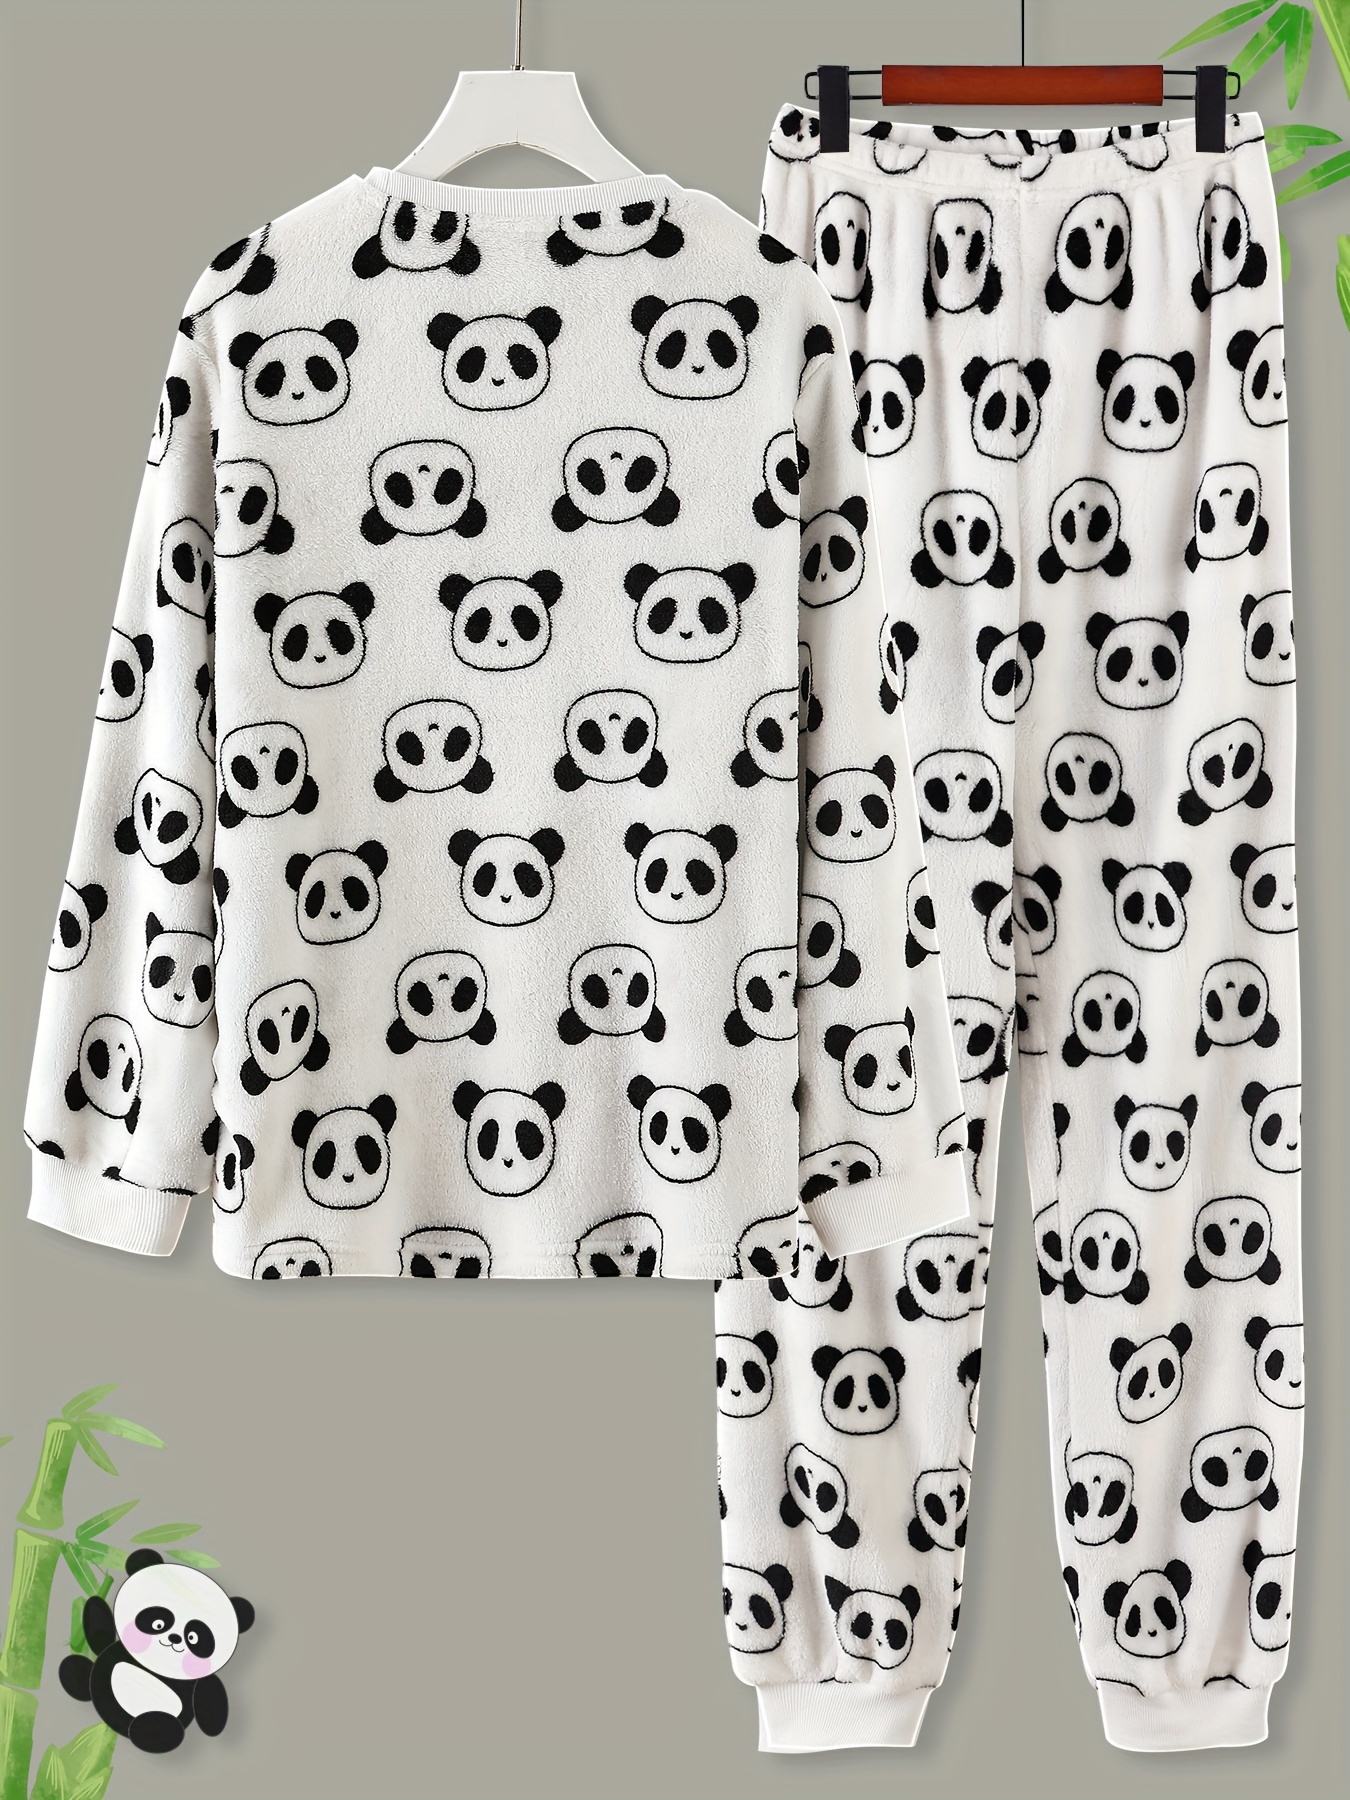 Fuzzy Panda Lingerie Set